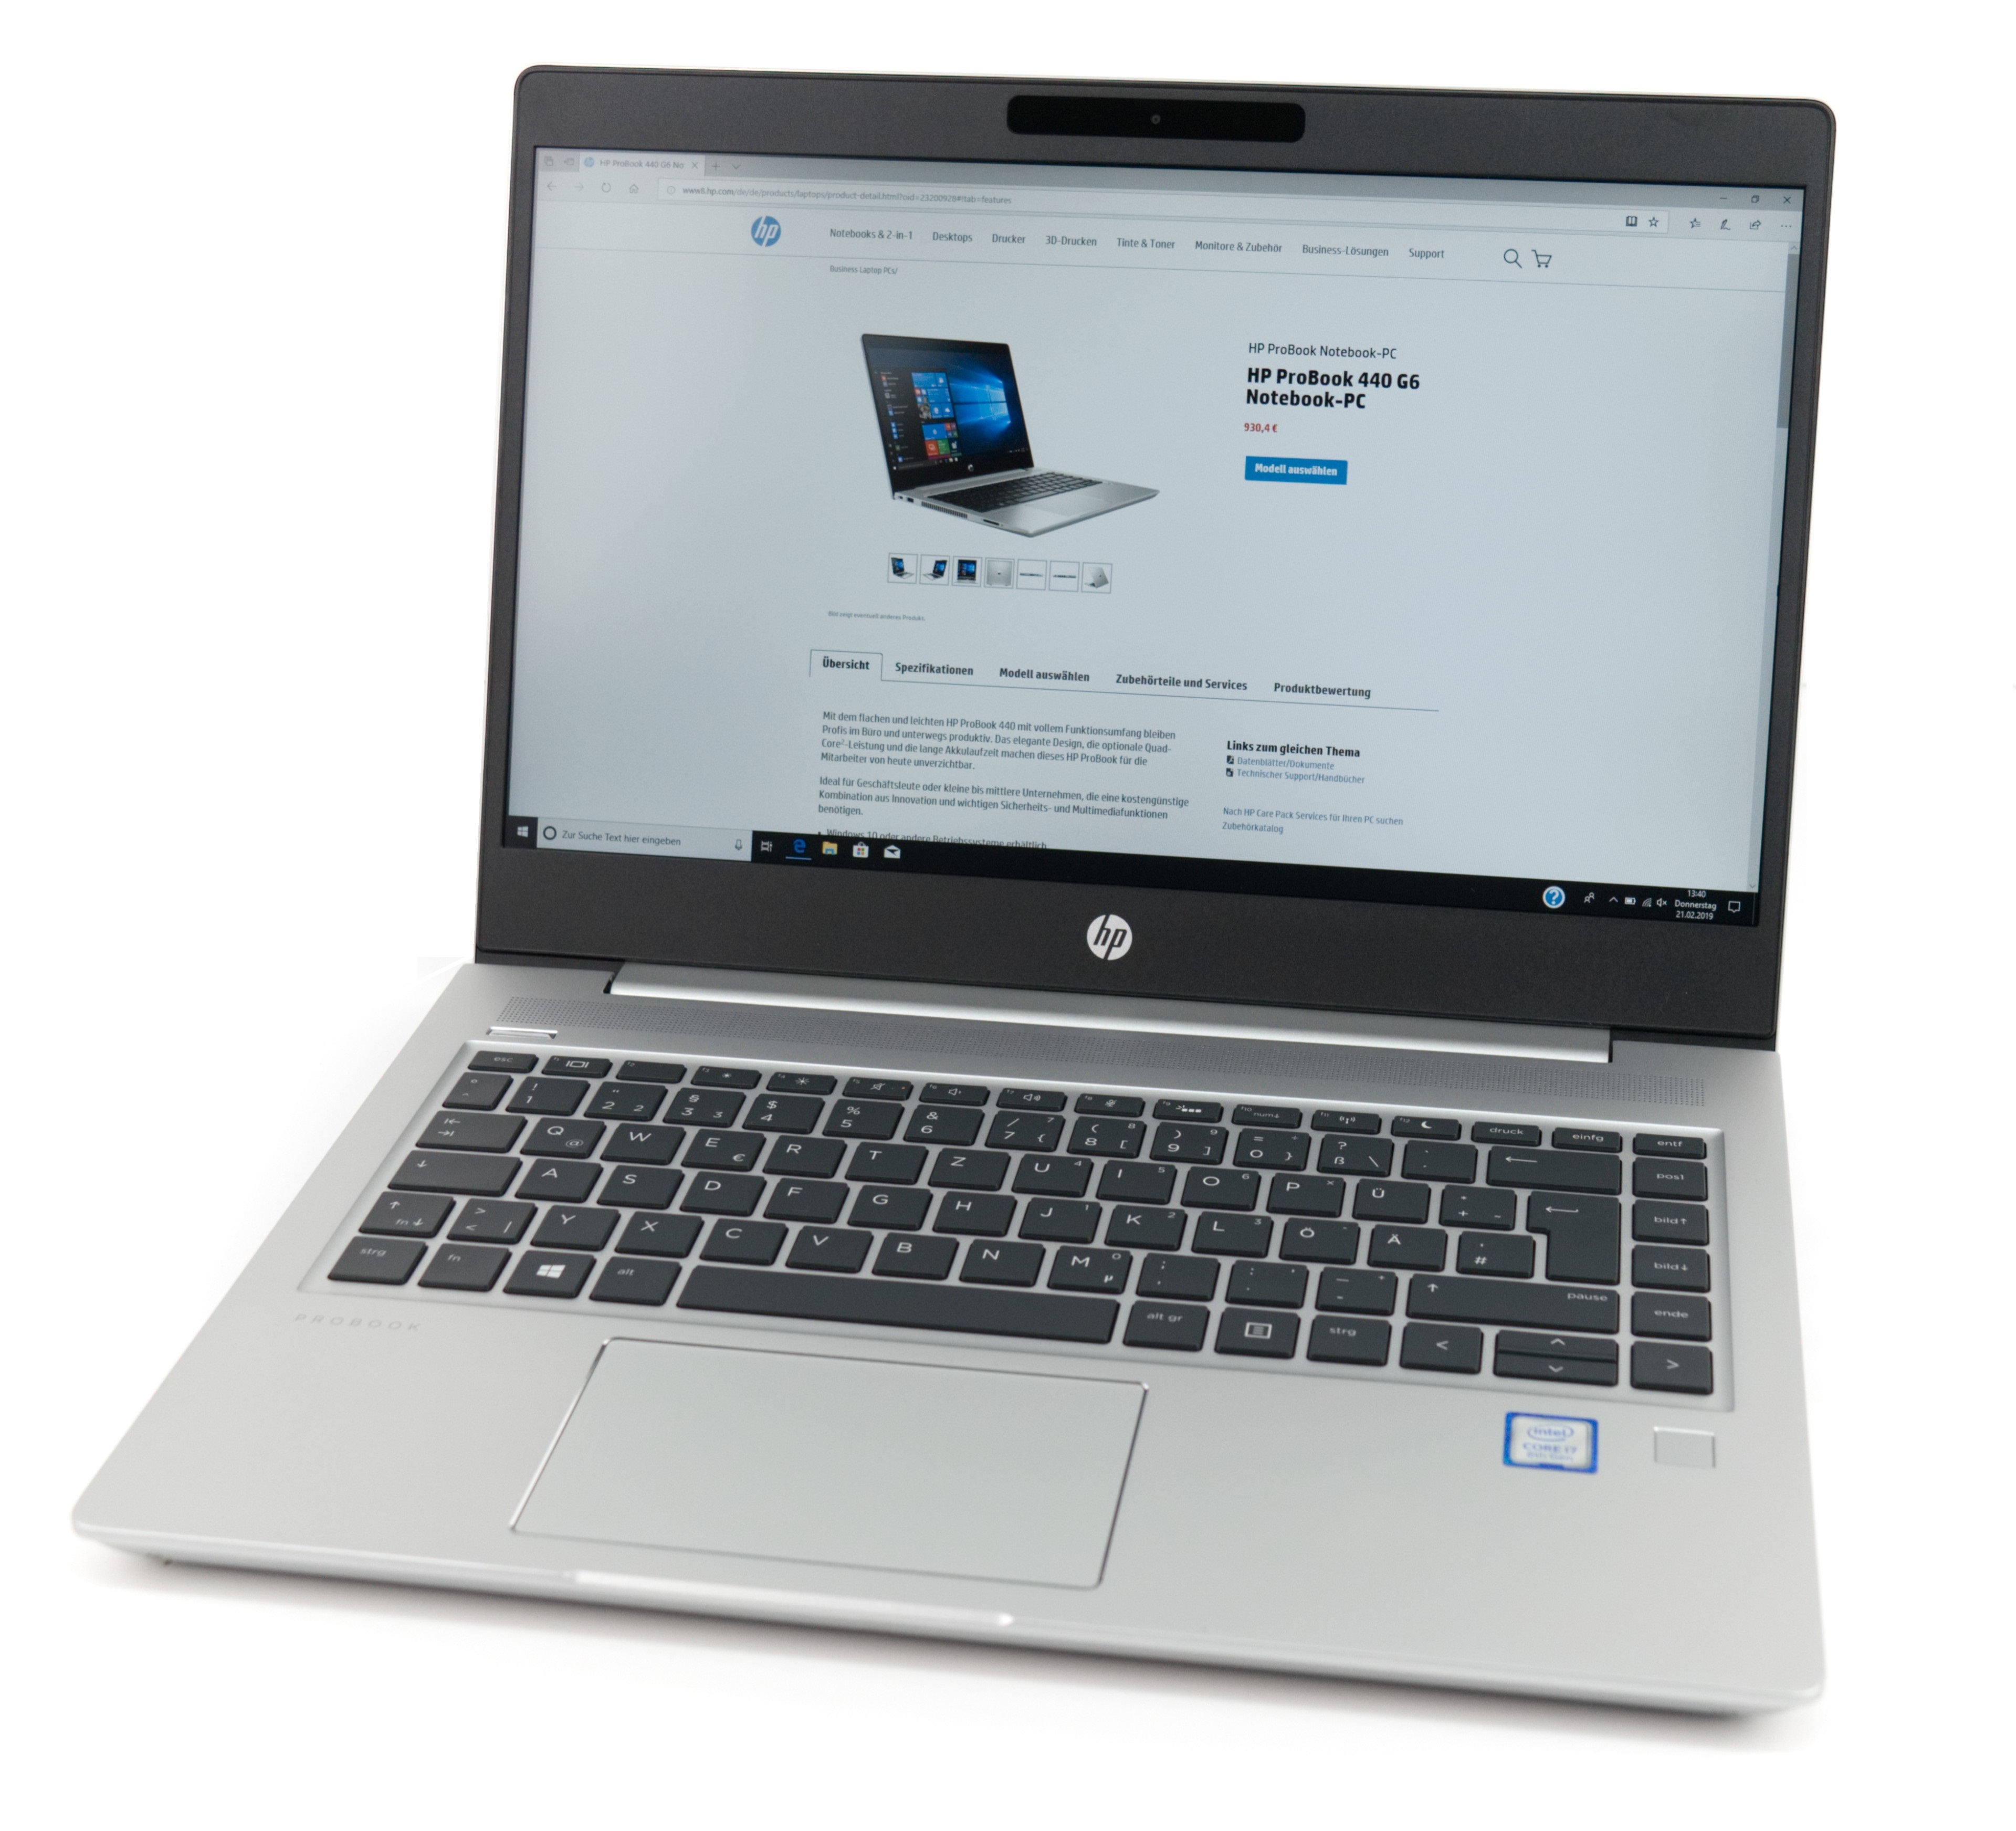 ga zo door Standaard Vluchtig HP ProBook 440 G6 (i7, 512 GB, FHD) Laptop Review - NotebookCheck.net  Reviews